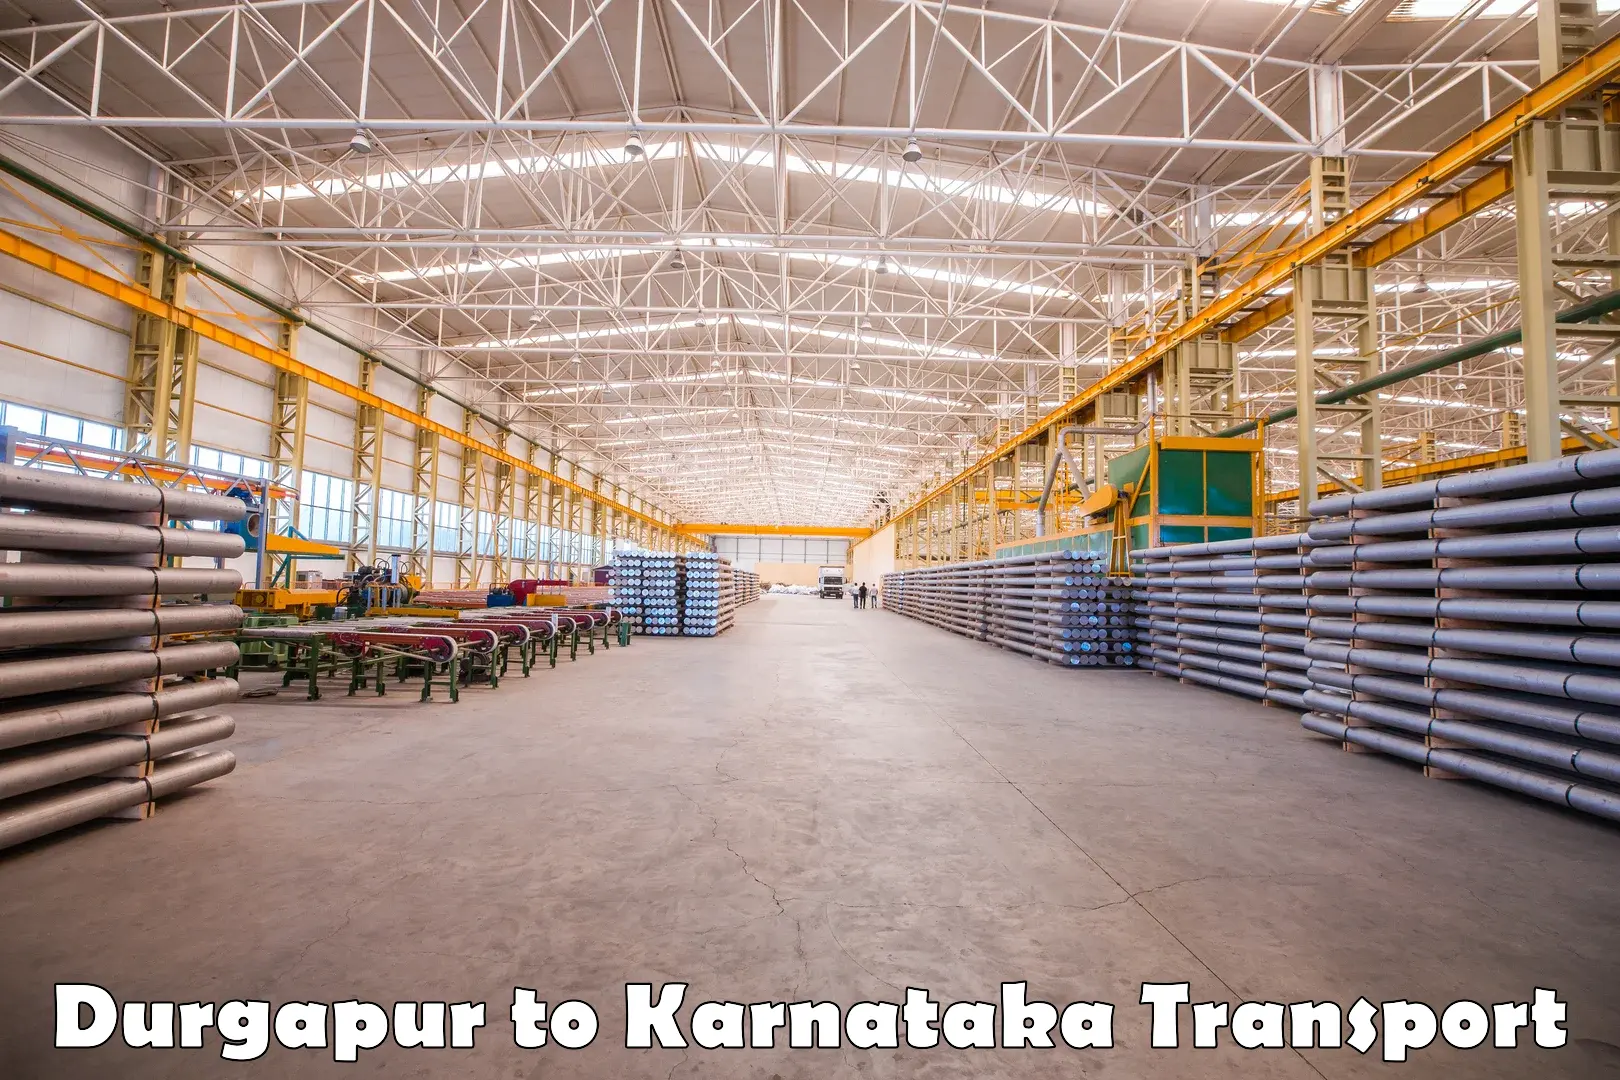 Land transport services in Durgapur to Bengaluru